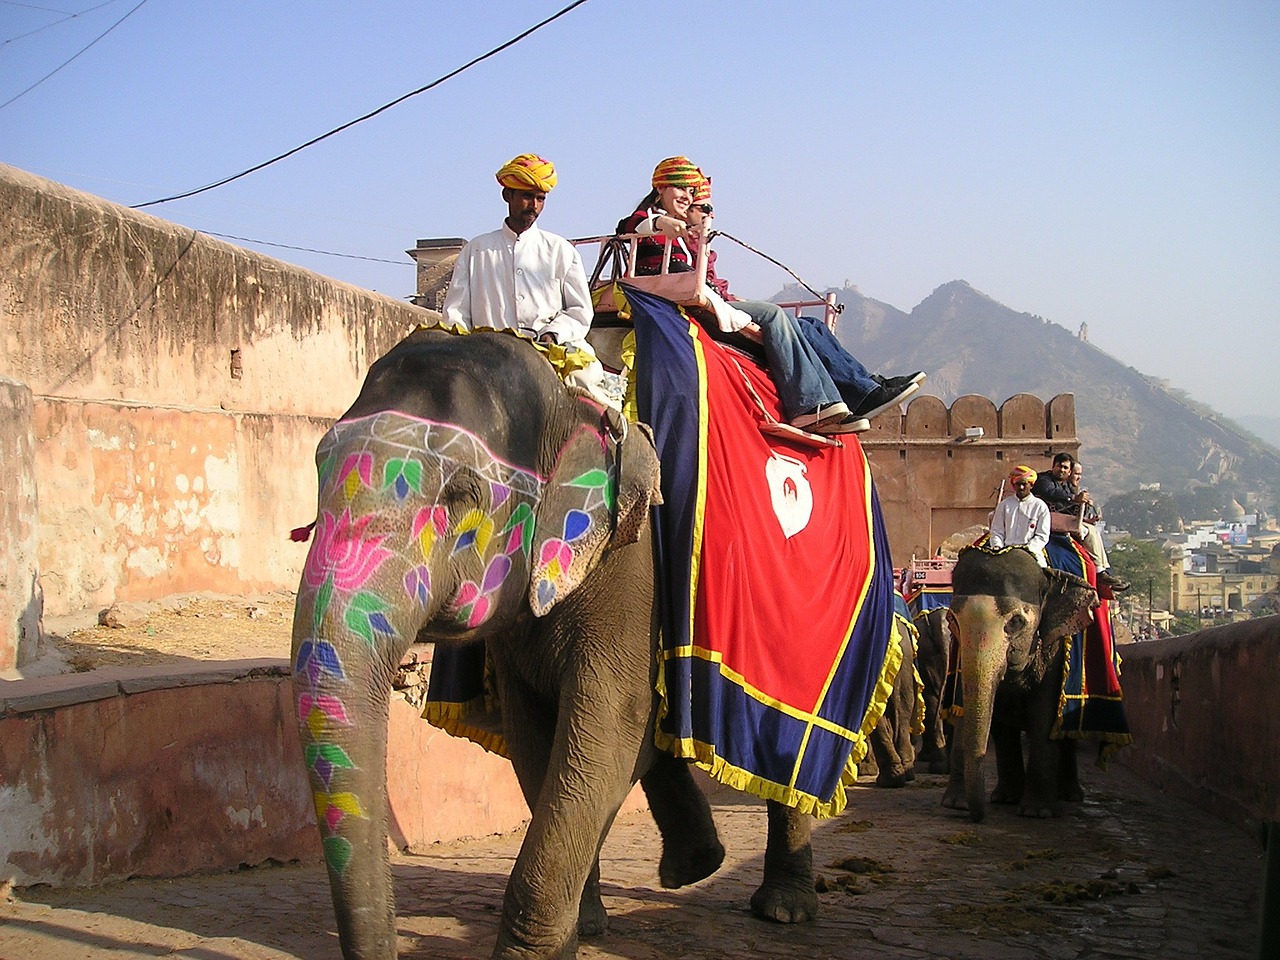 Men riding an Indian elephant.